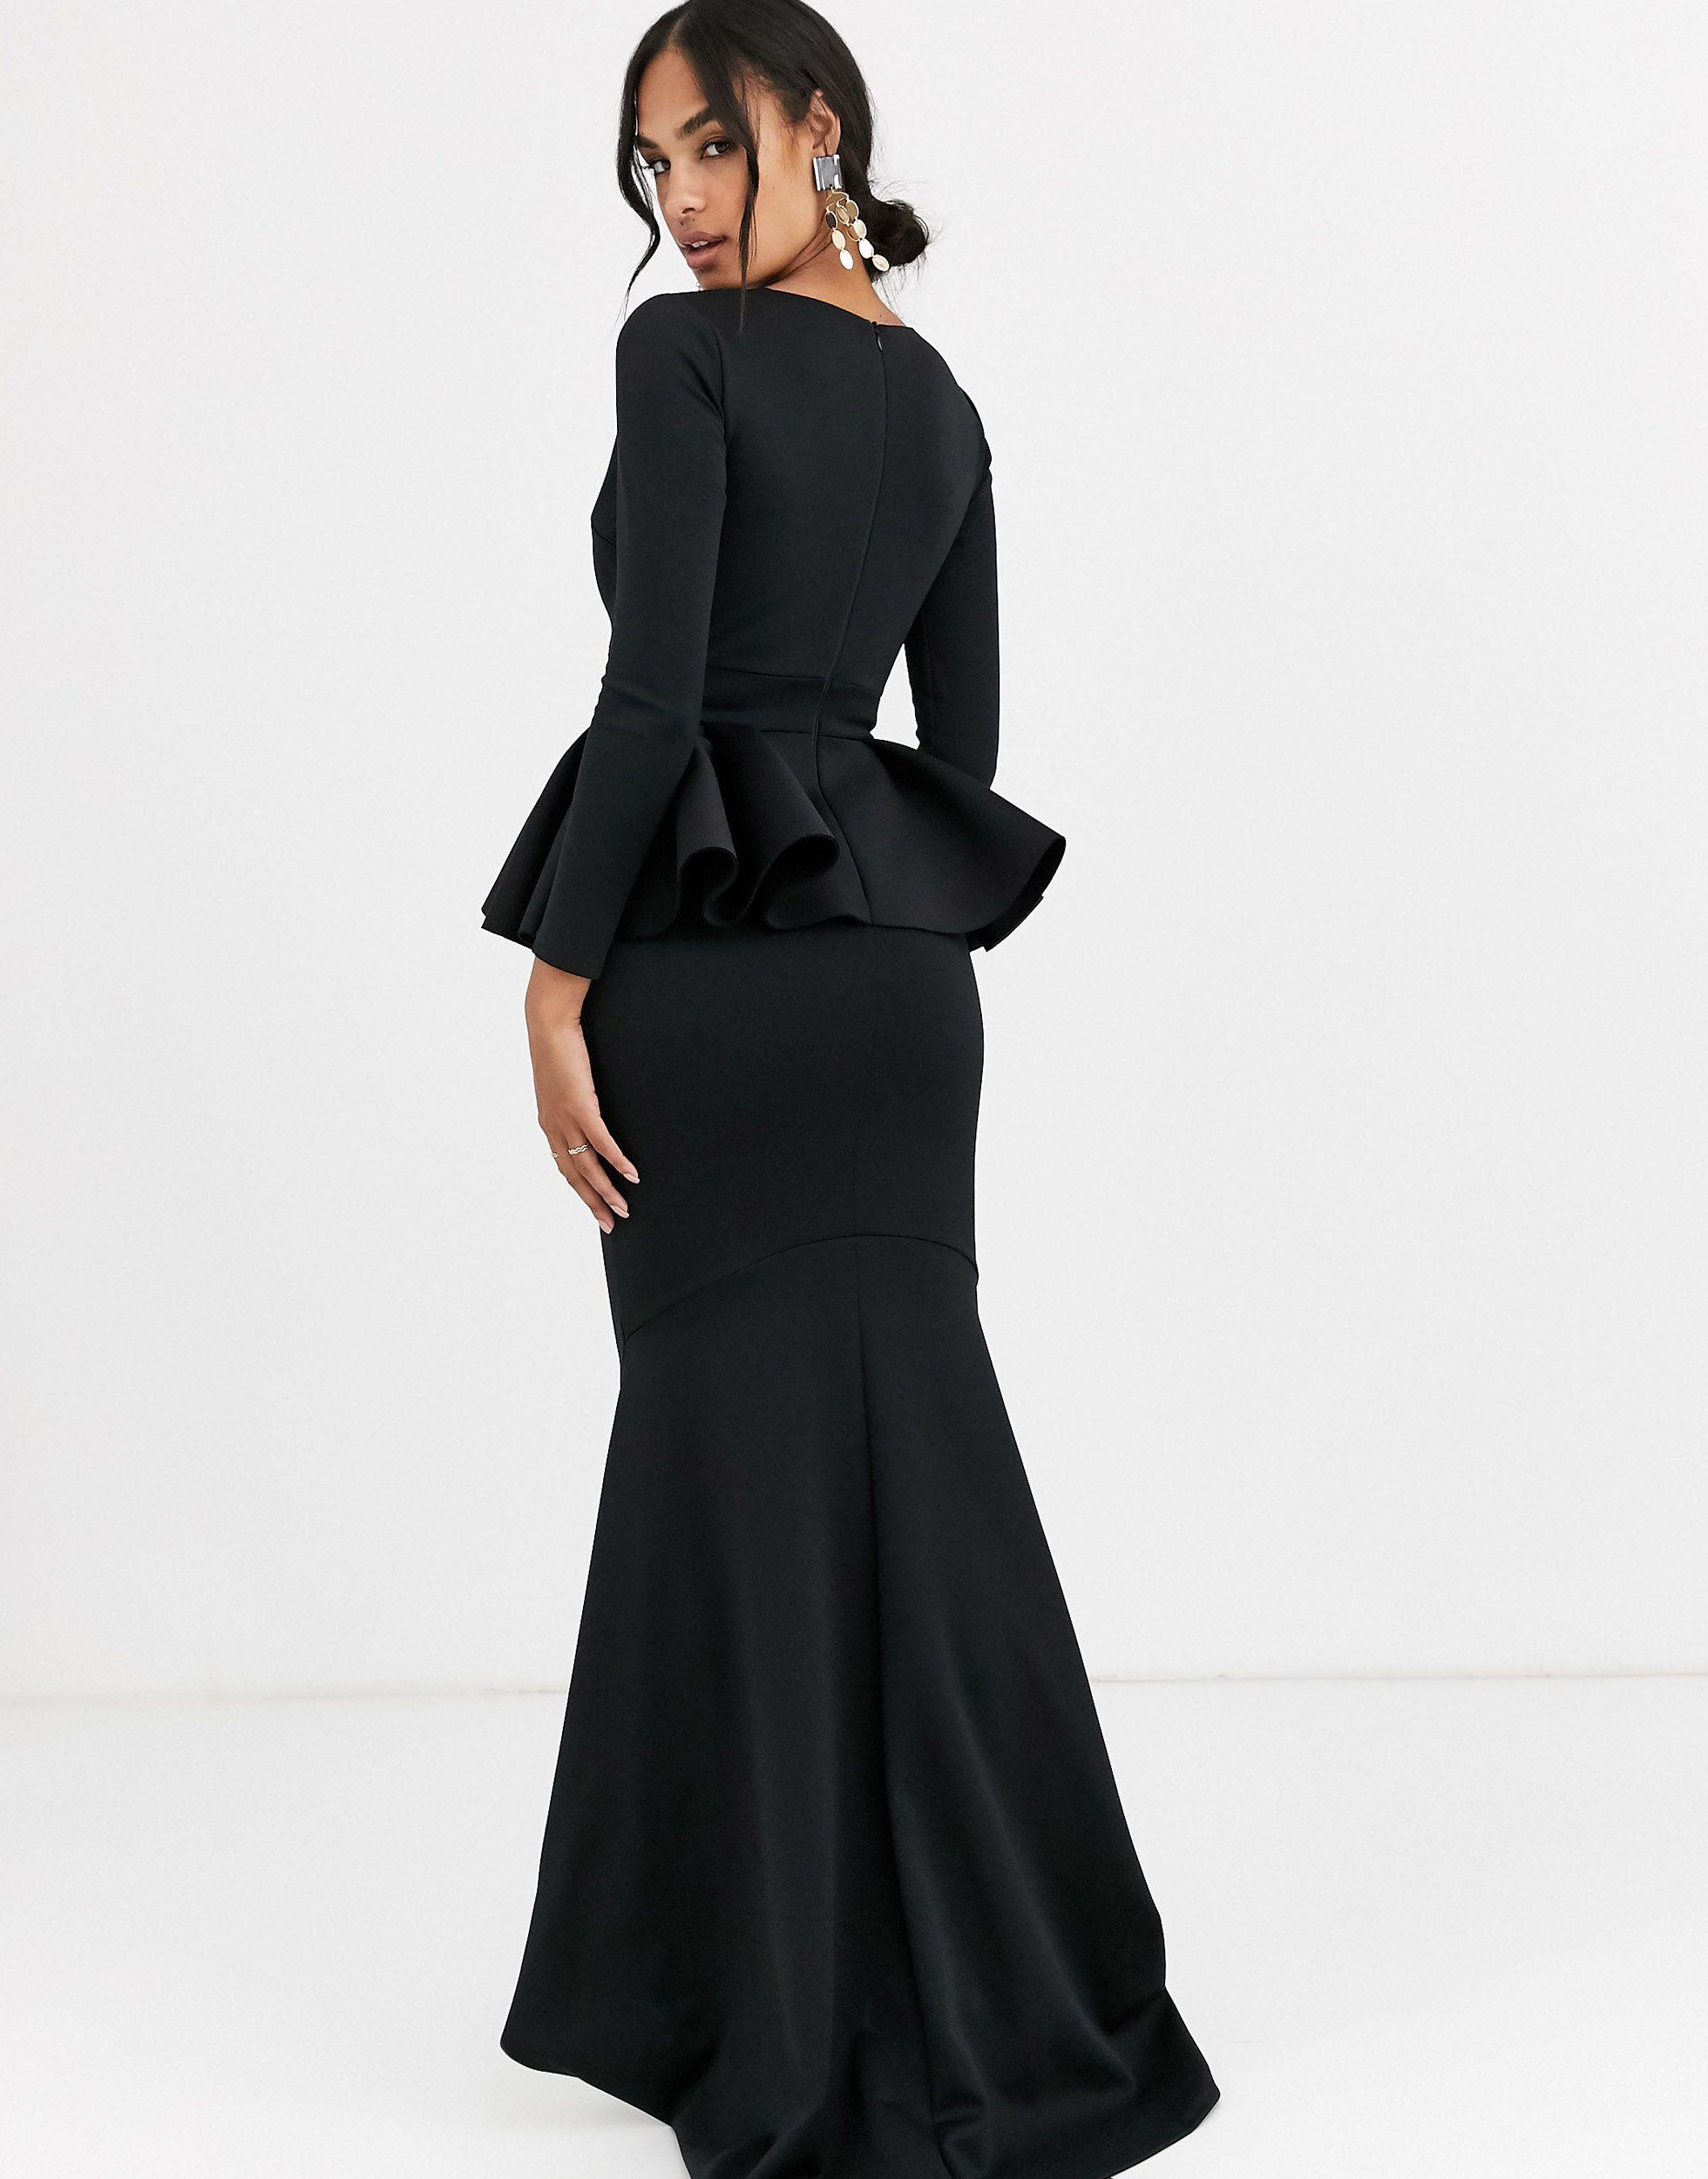 Peplum Dress: Modest Dresses By Brigitte Brianna - SexyModest Boutique